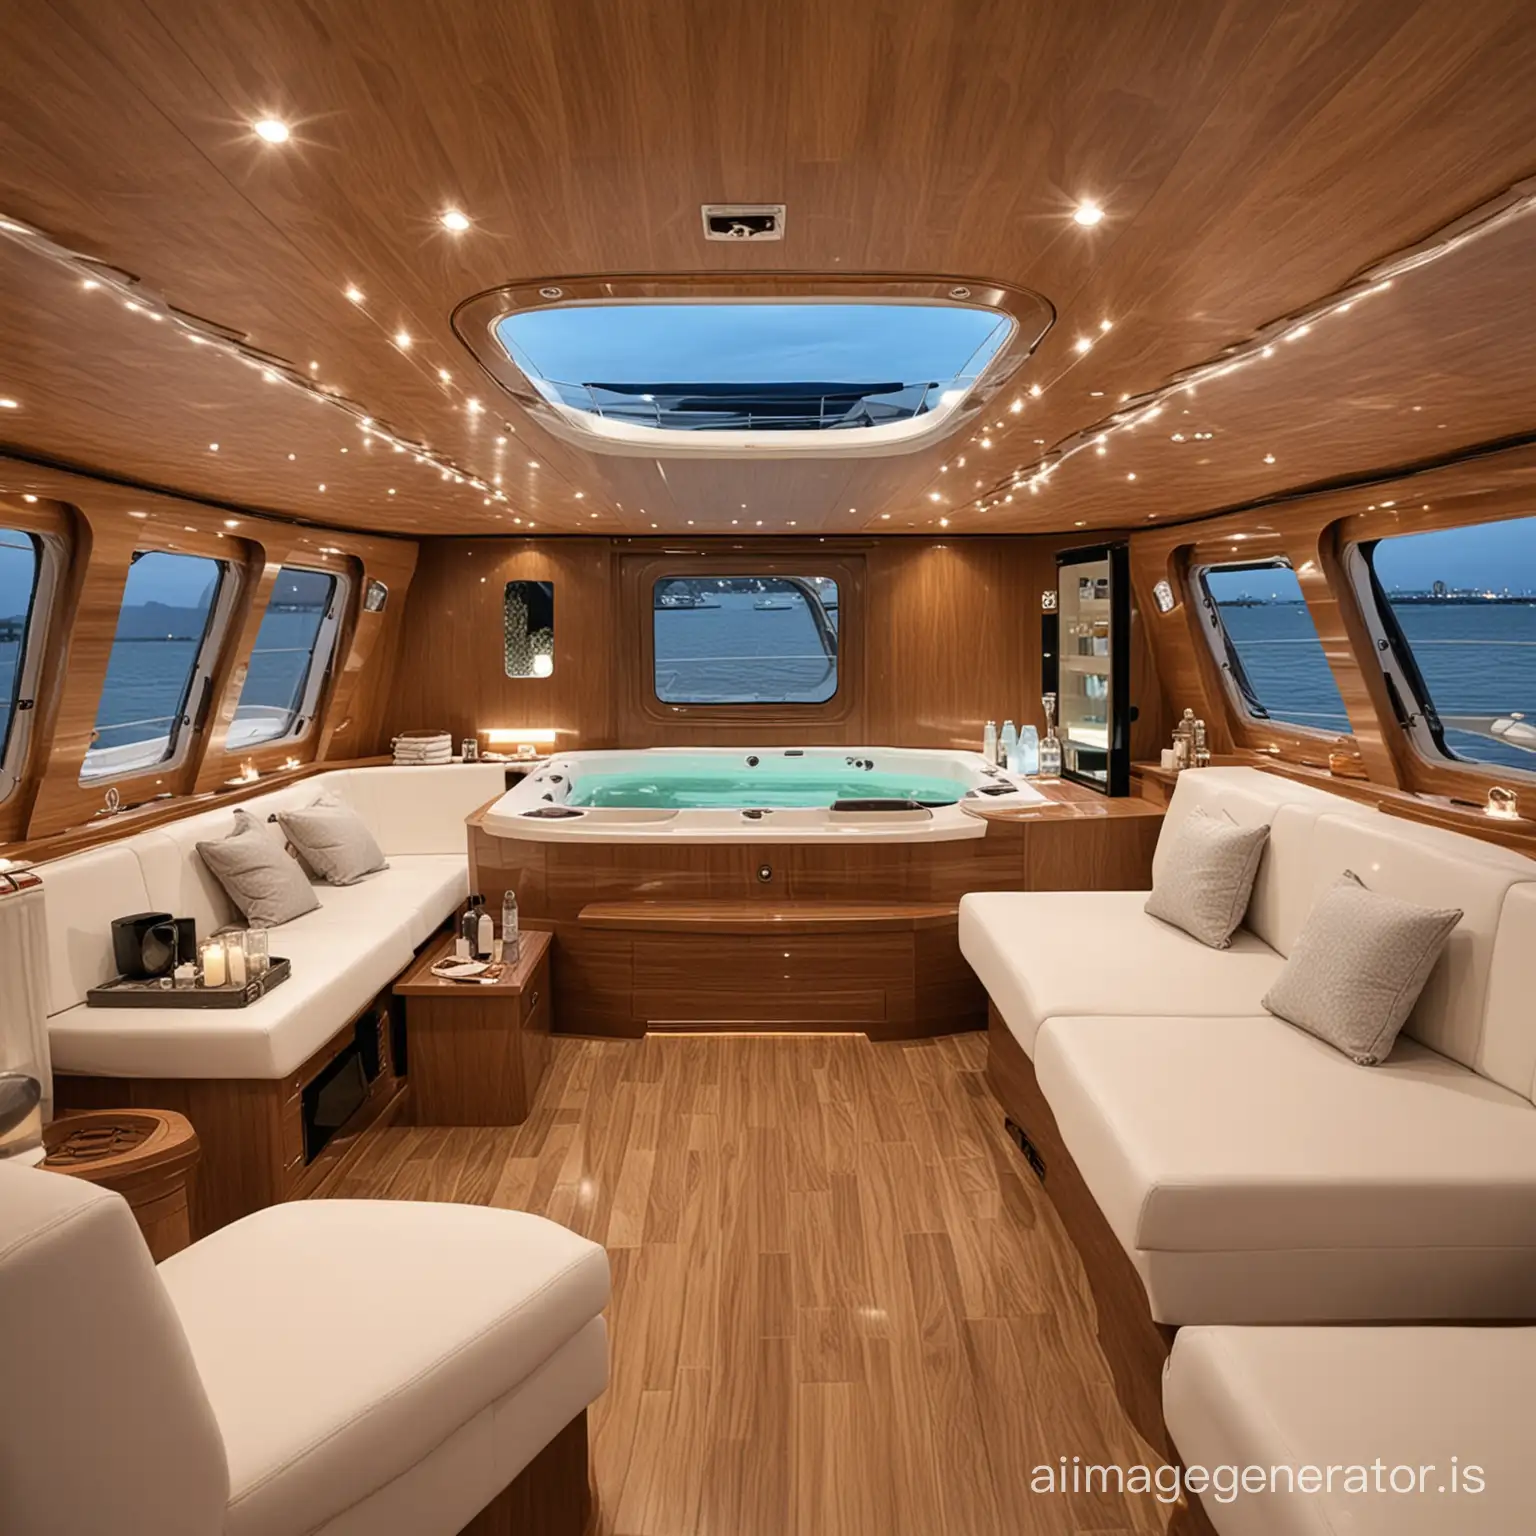 Spa on boat complete interior